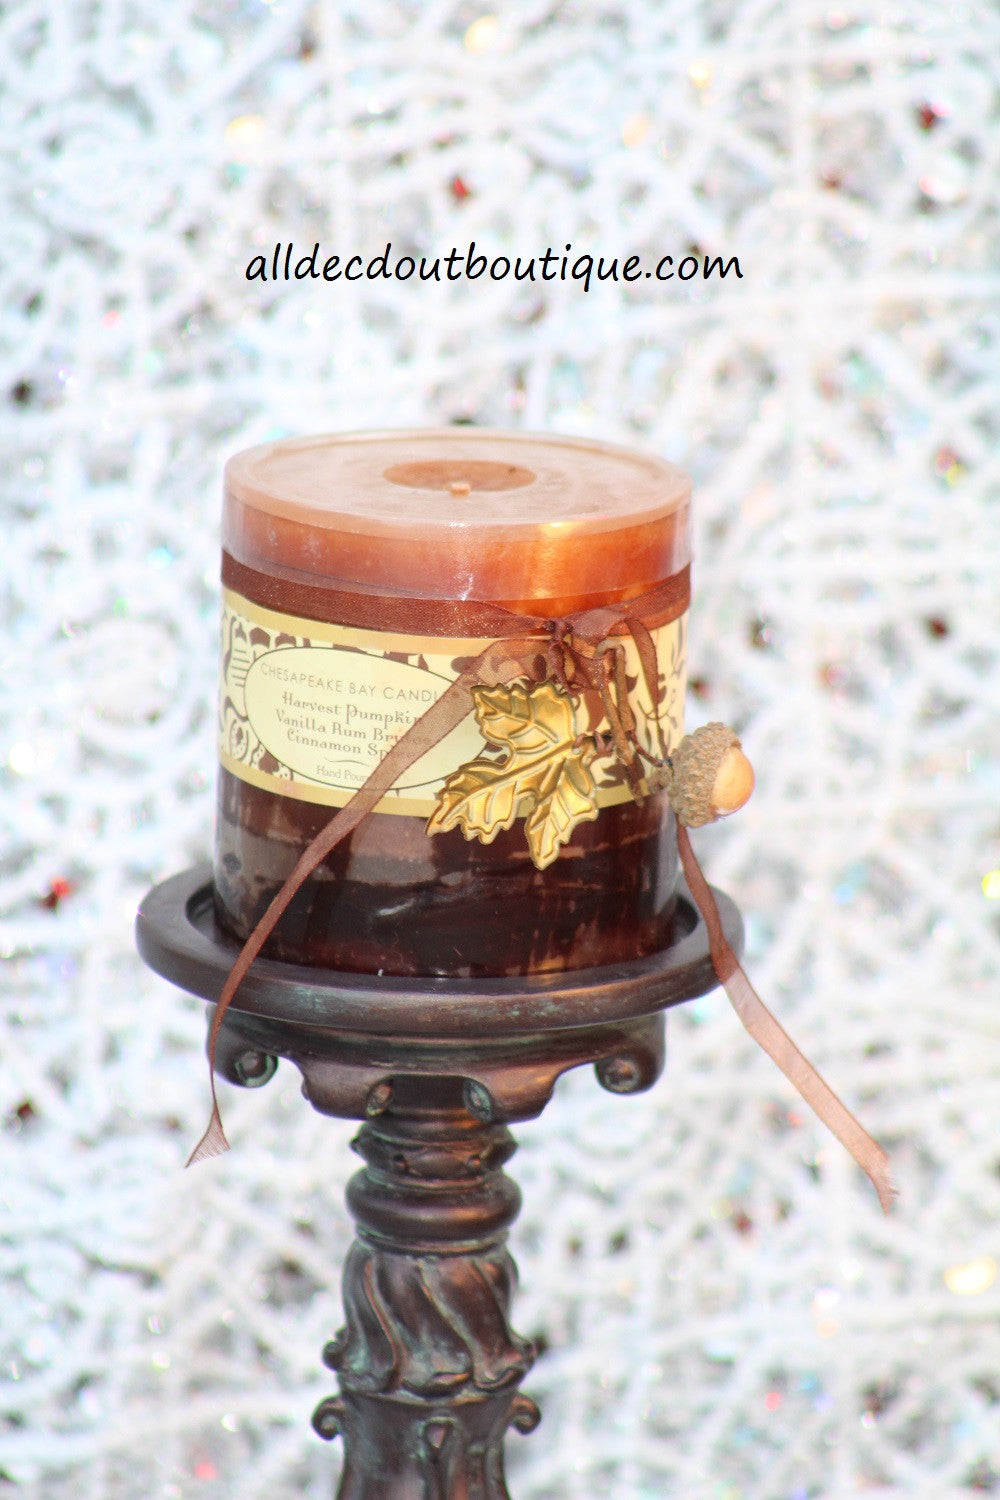 Pillar Candle Harvest Pumpkin Vanilla Rum Brulee Cinnamon Spice